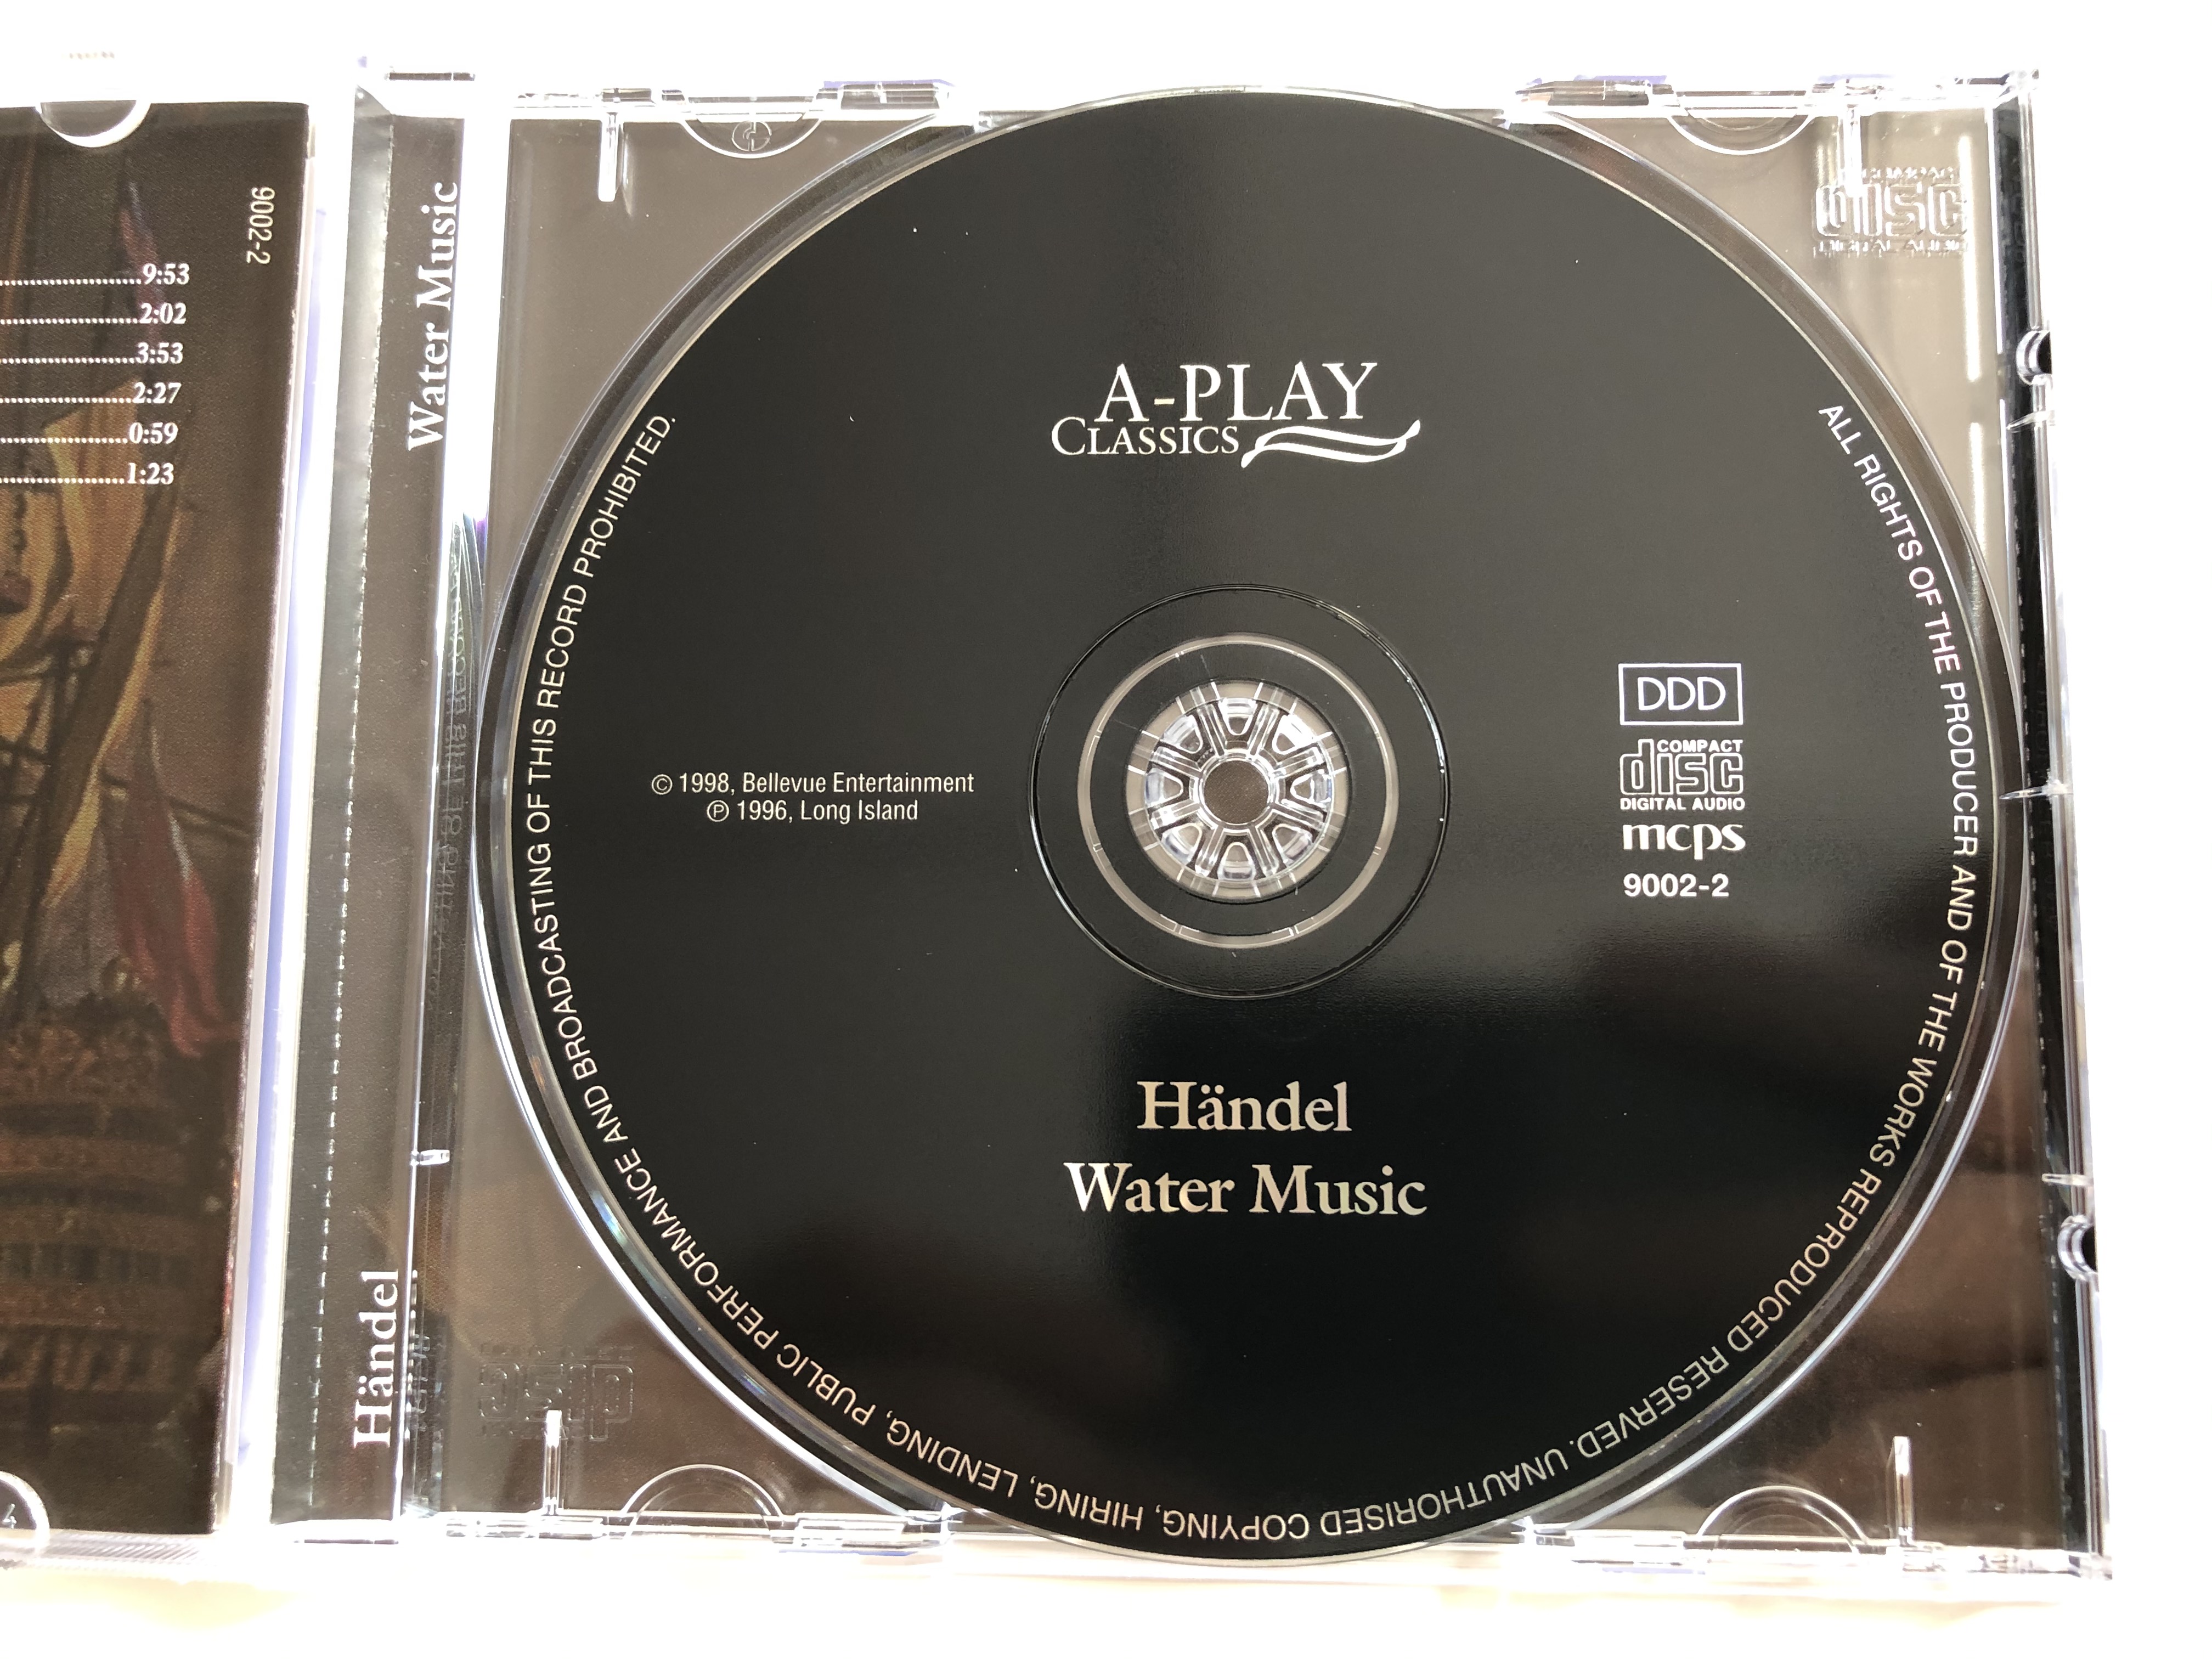 handel-water-music-nurnberg-symphony-orchestra-hans-peter-gmur-musici-di-san-marco-alberto-lizzio-a-play-classics-audio-cd-1998-9002-2-4-.jpg